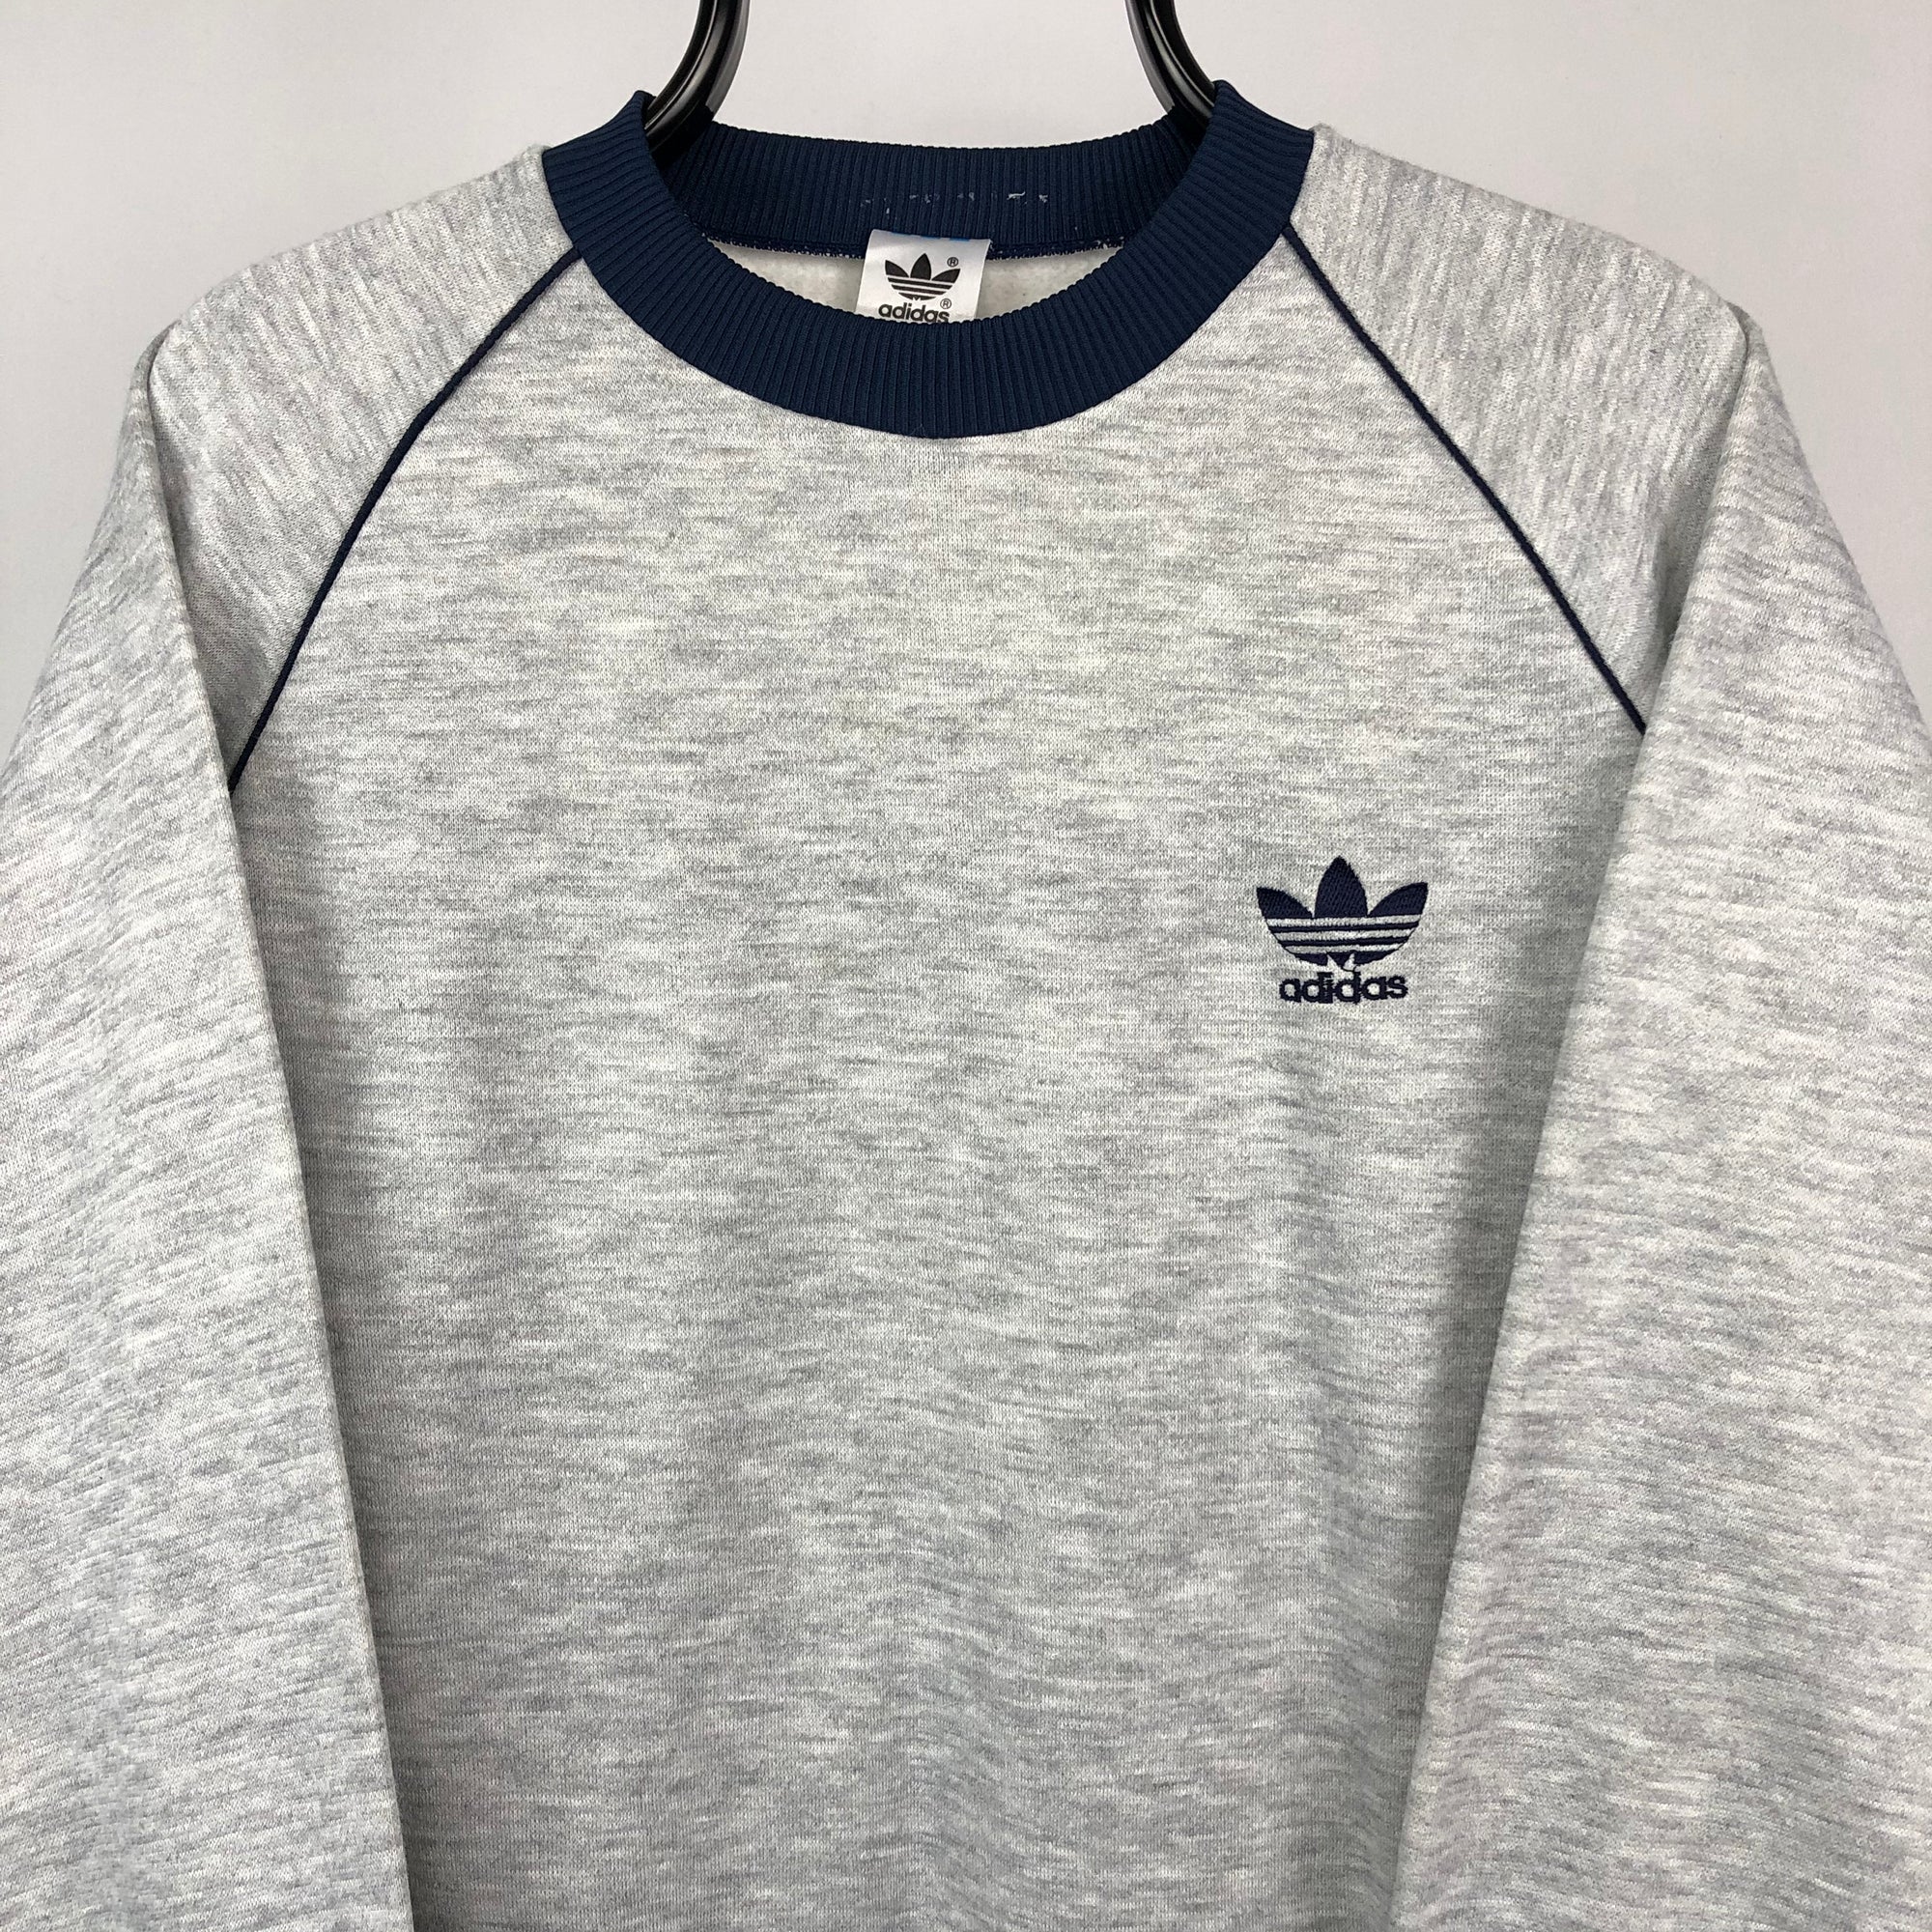 Vintage 90s Adidas Embroidered Small Logo Sweatshirt in Grey/Navy - Men's Medium/Women's Large